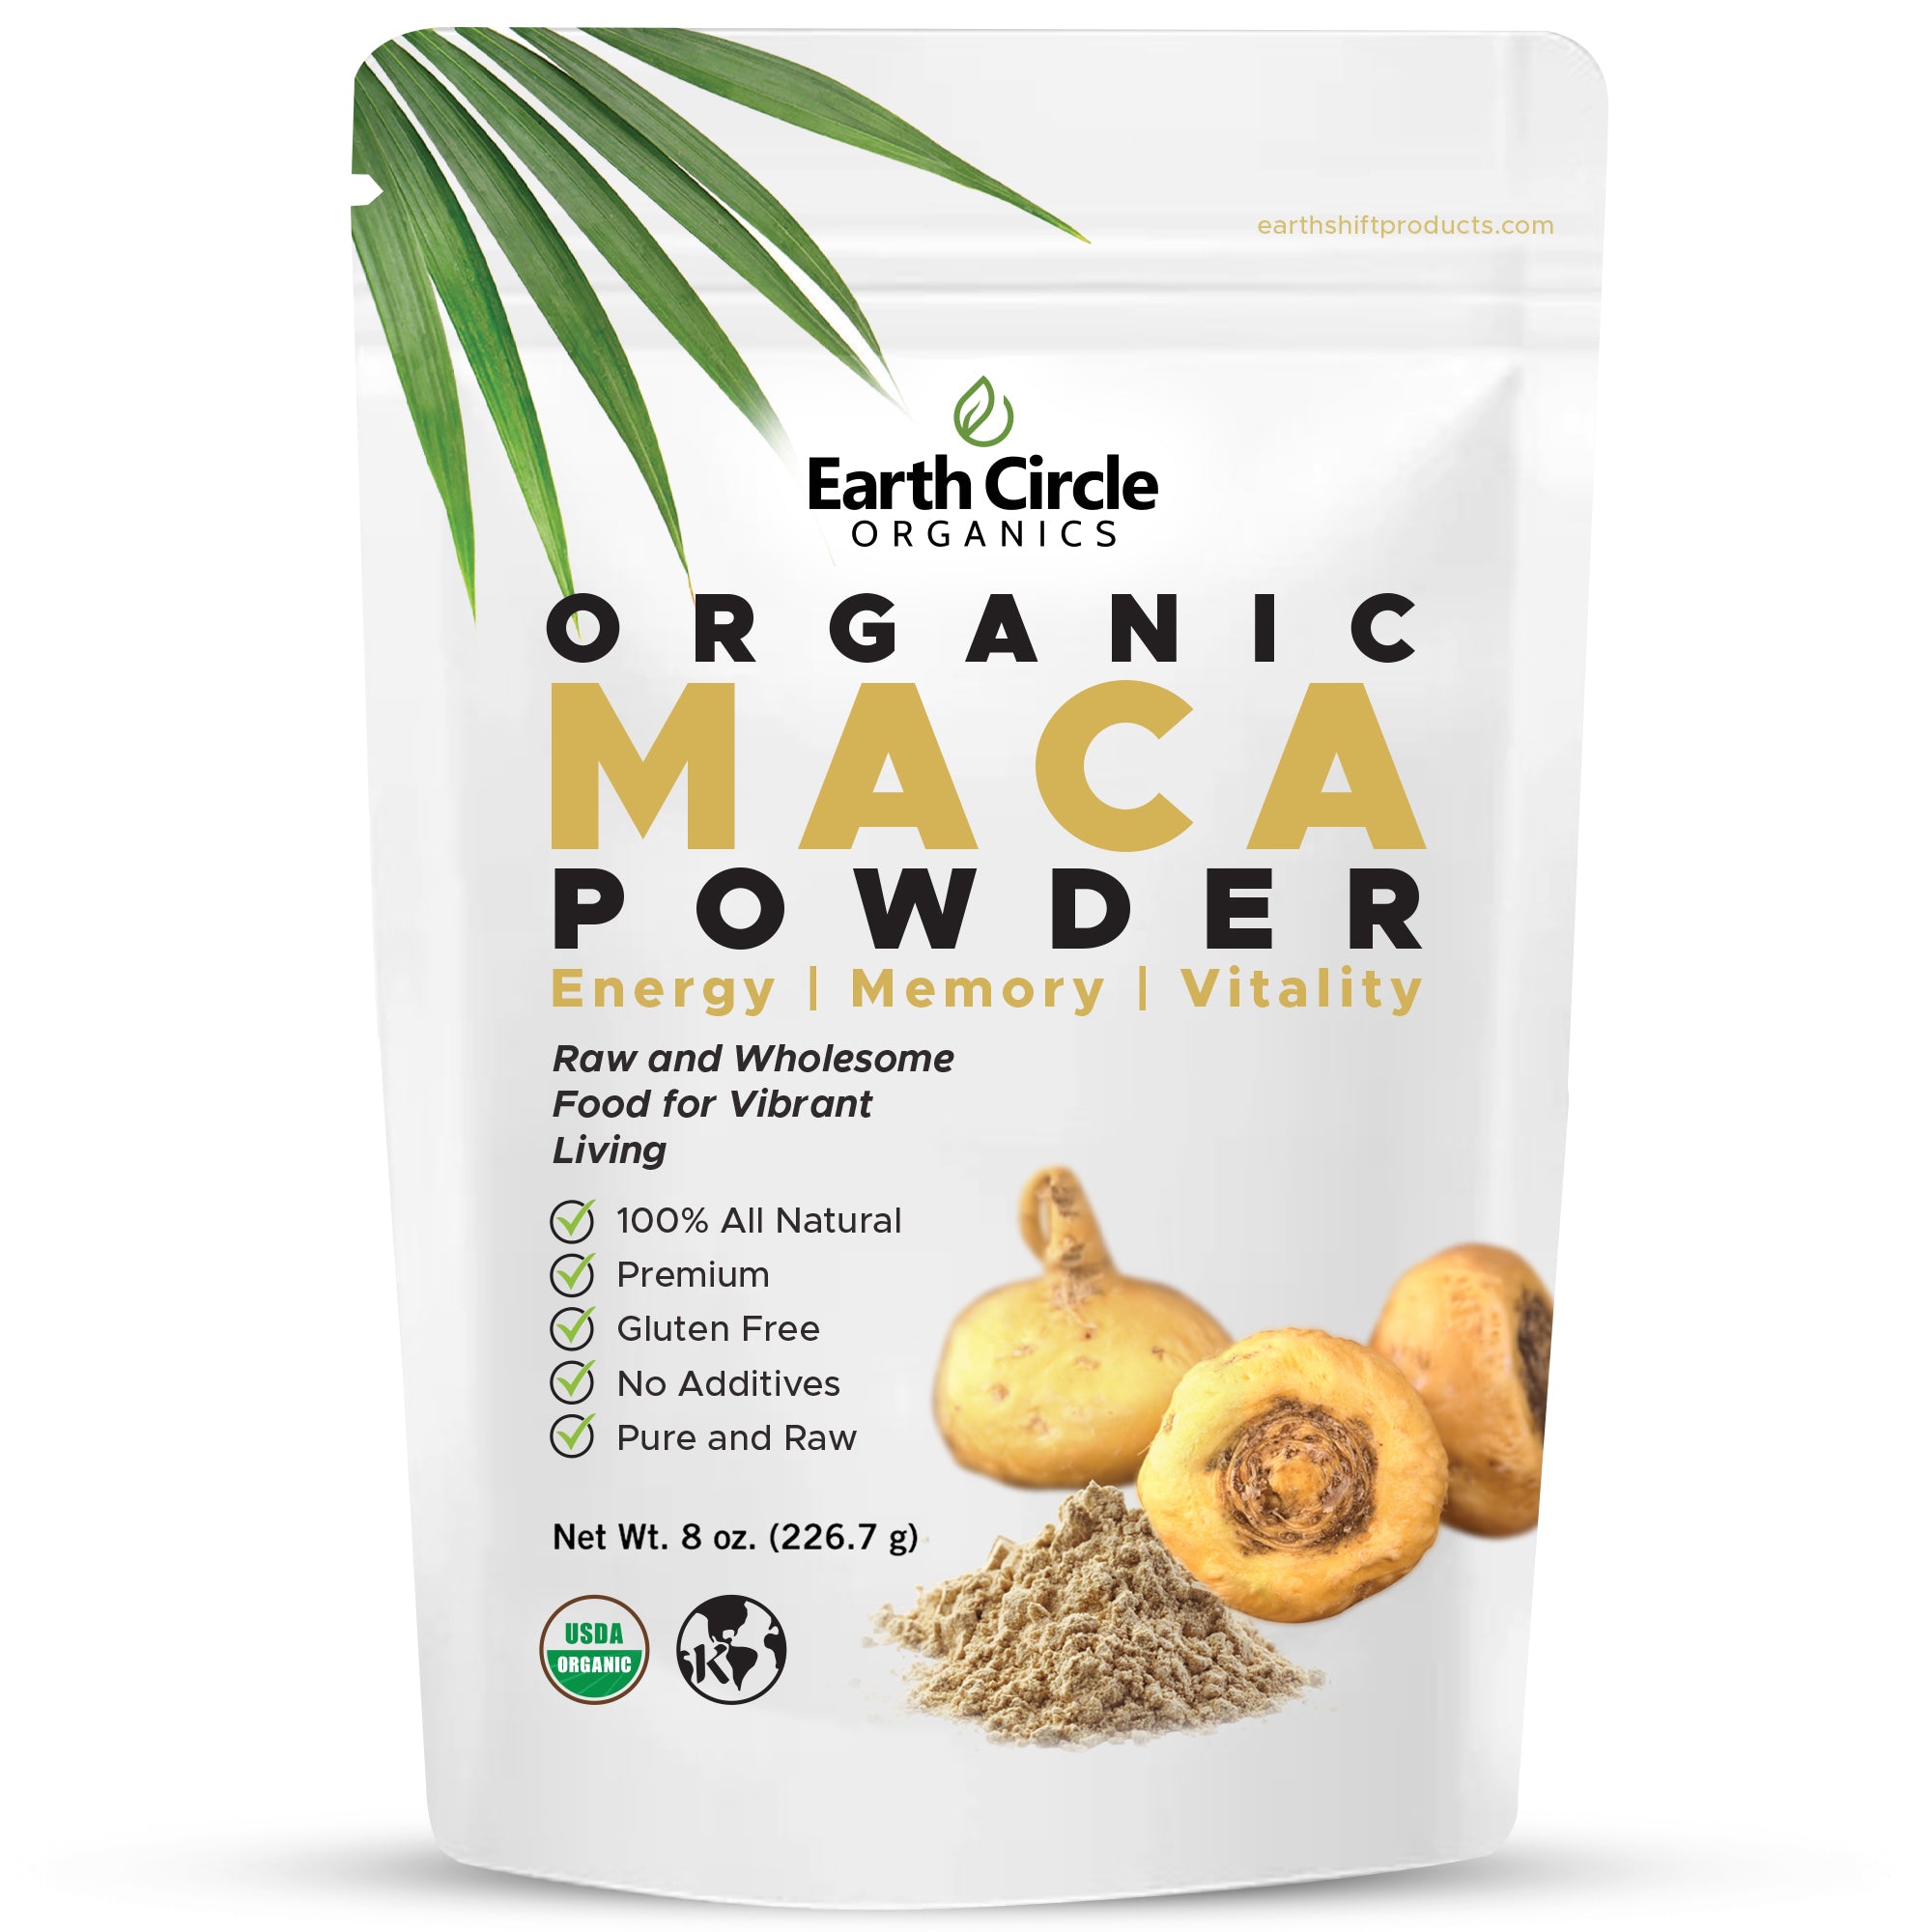 Earth Circle Organics Maca Powder - 8oz | High Quality Organic Superfood